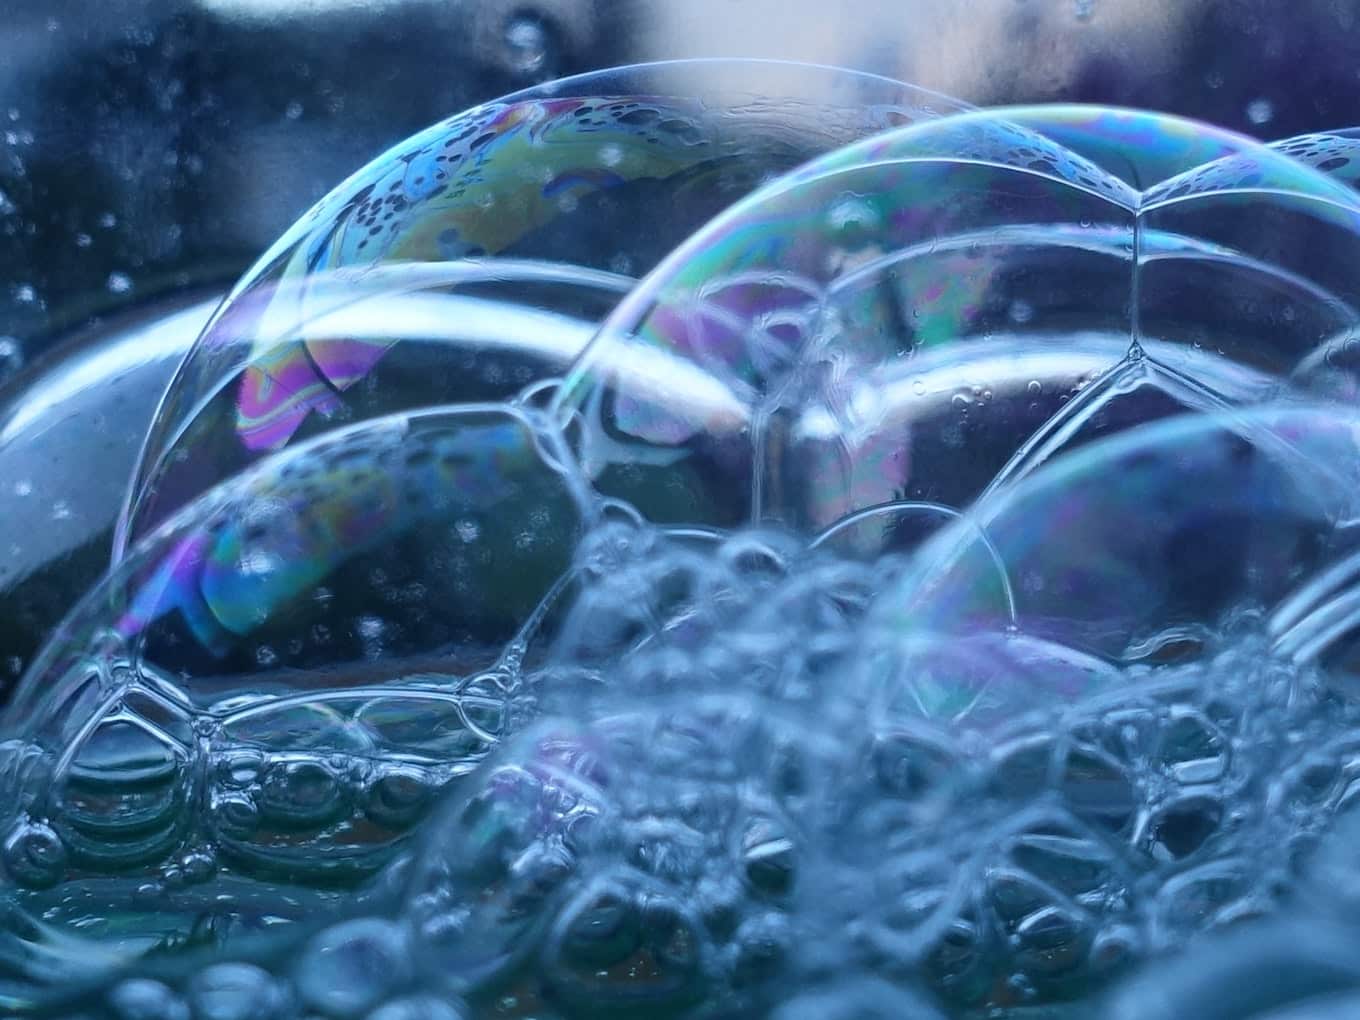 Soapy bubbles